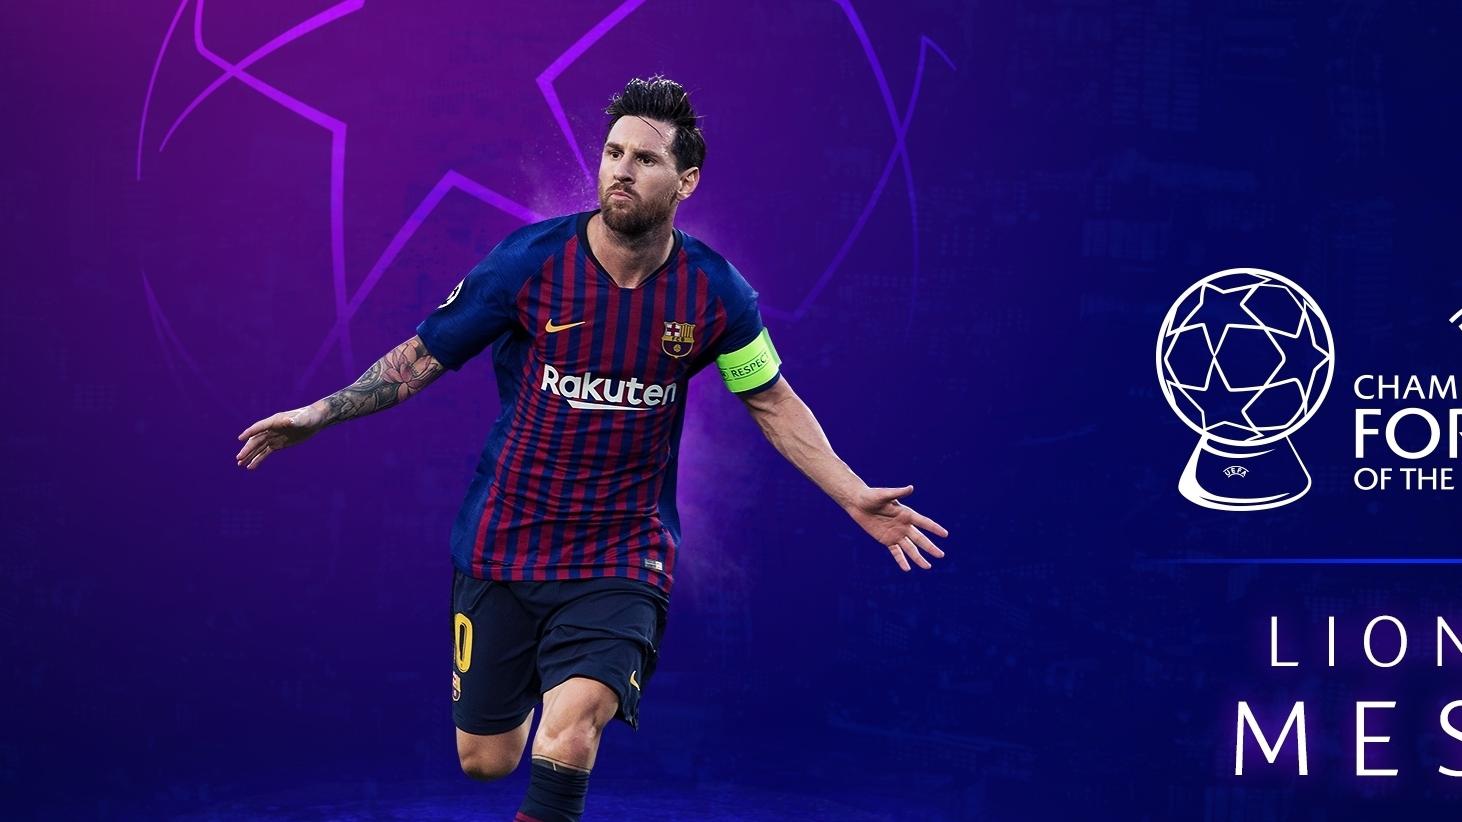 Lionel Messi Champions League Forward of the Season UEFA Champions